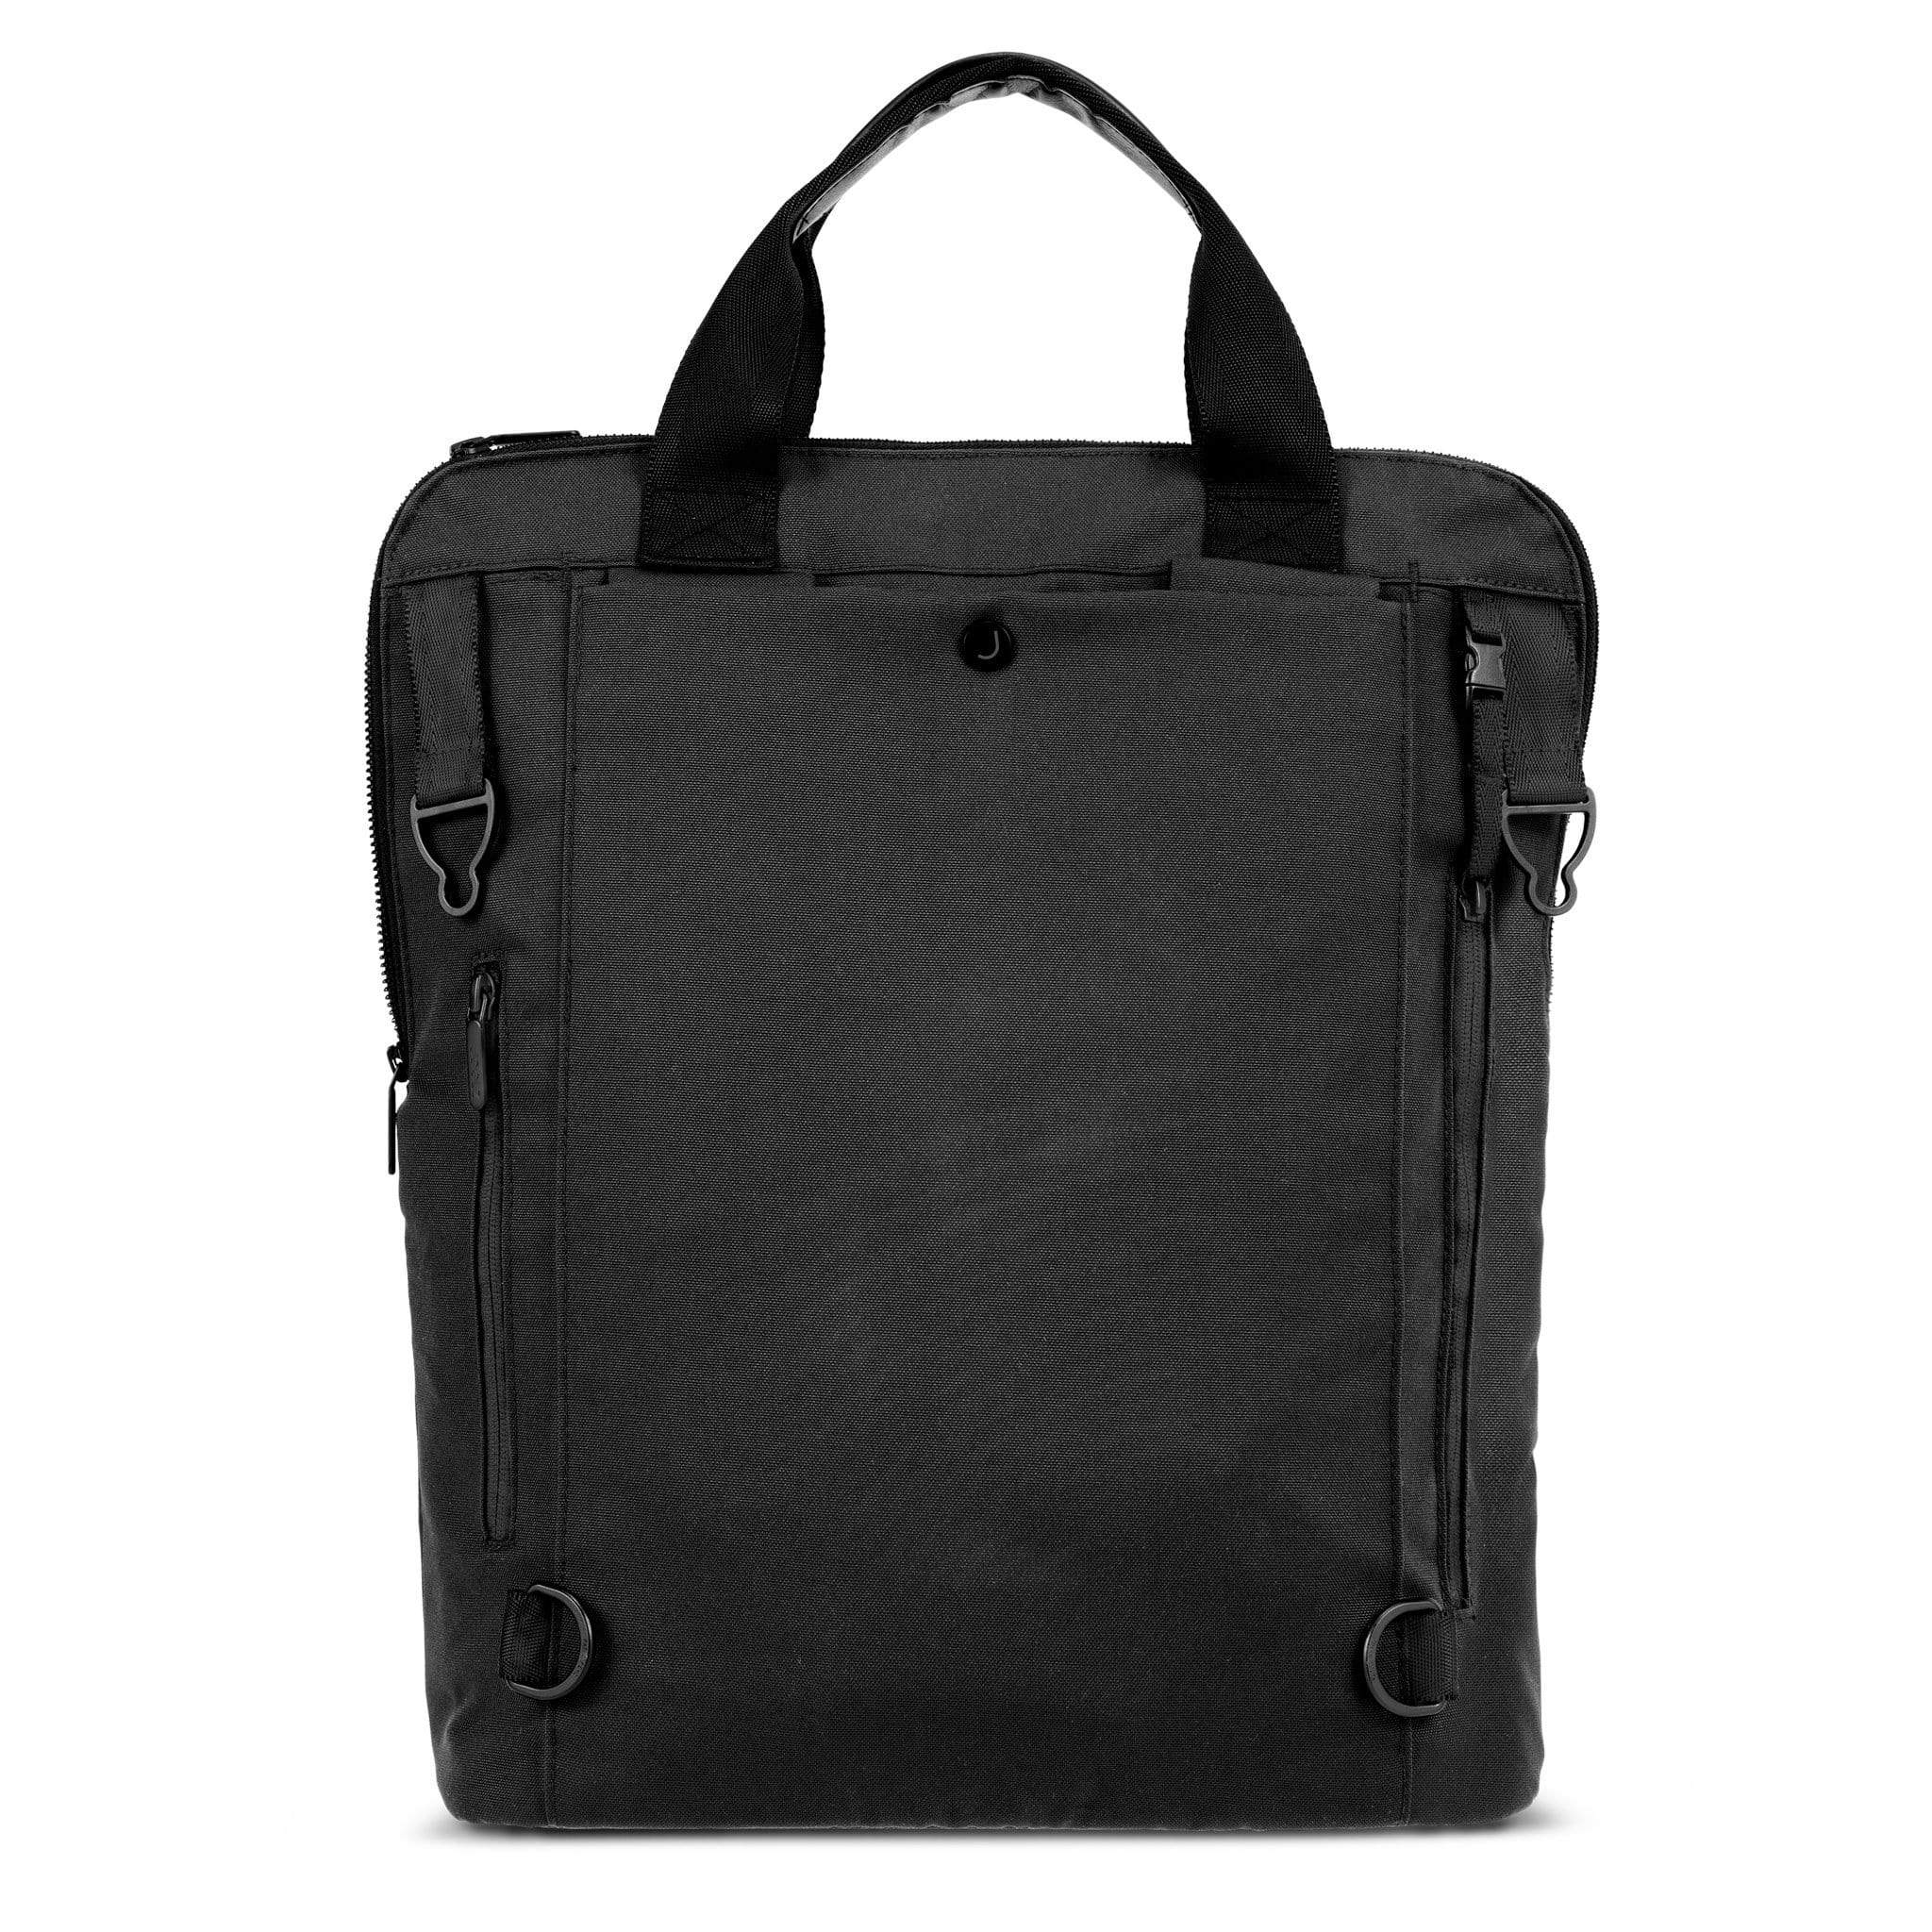 Joolz Backpack Black Backpacks 560051 8715688066706